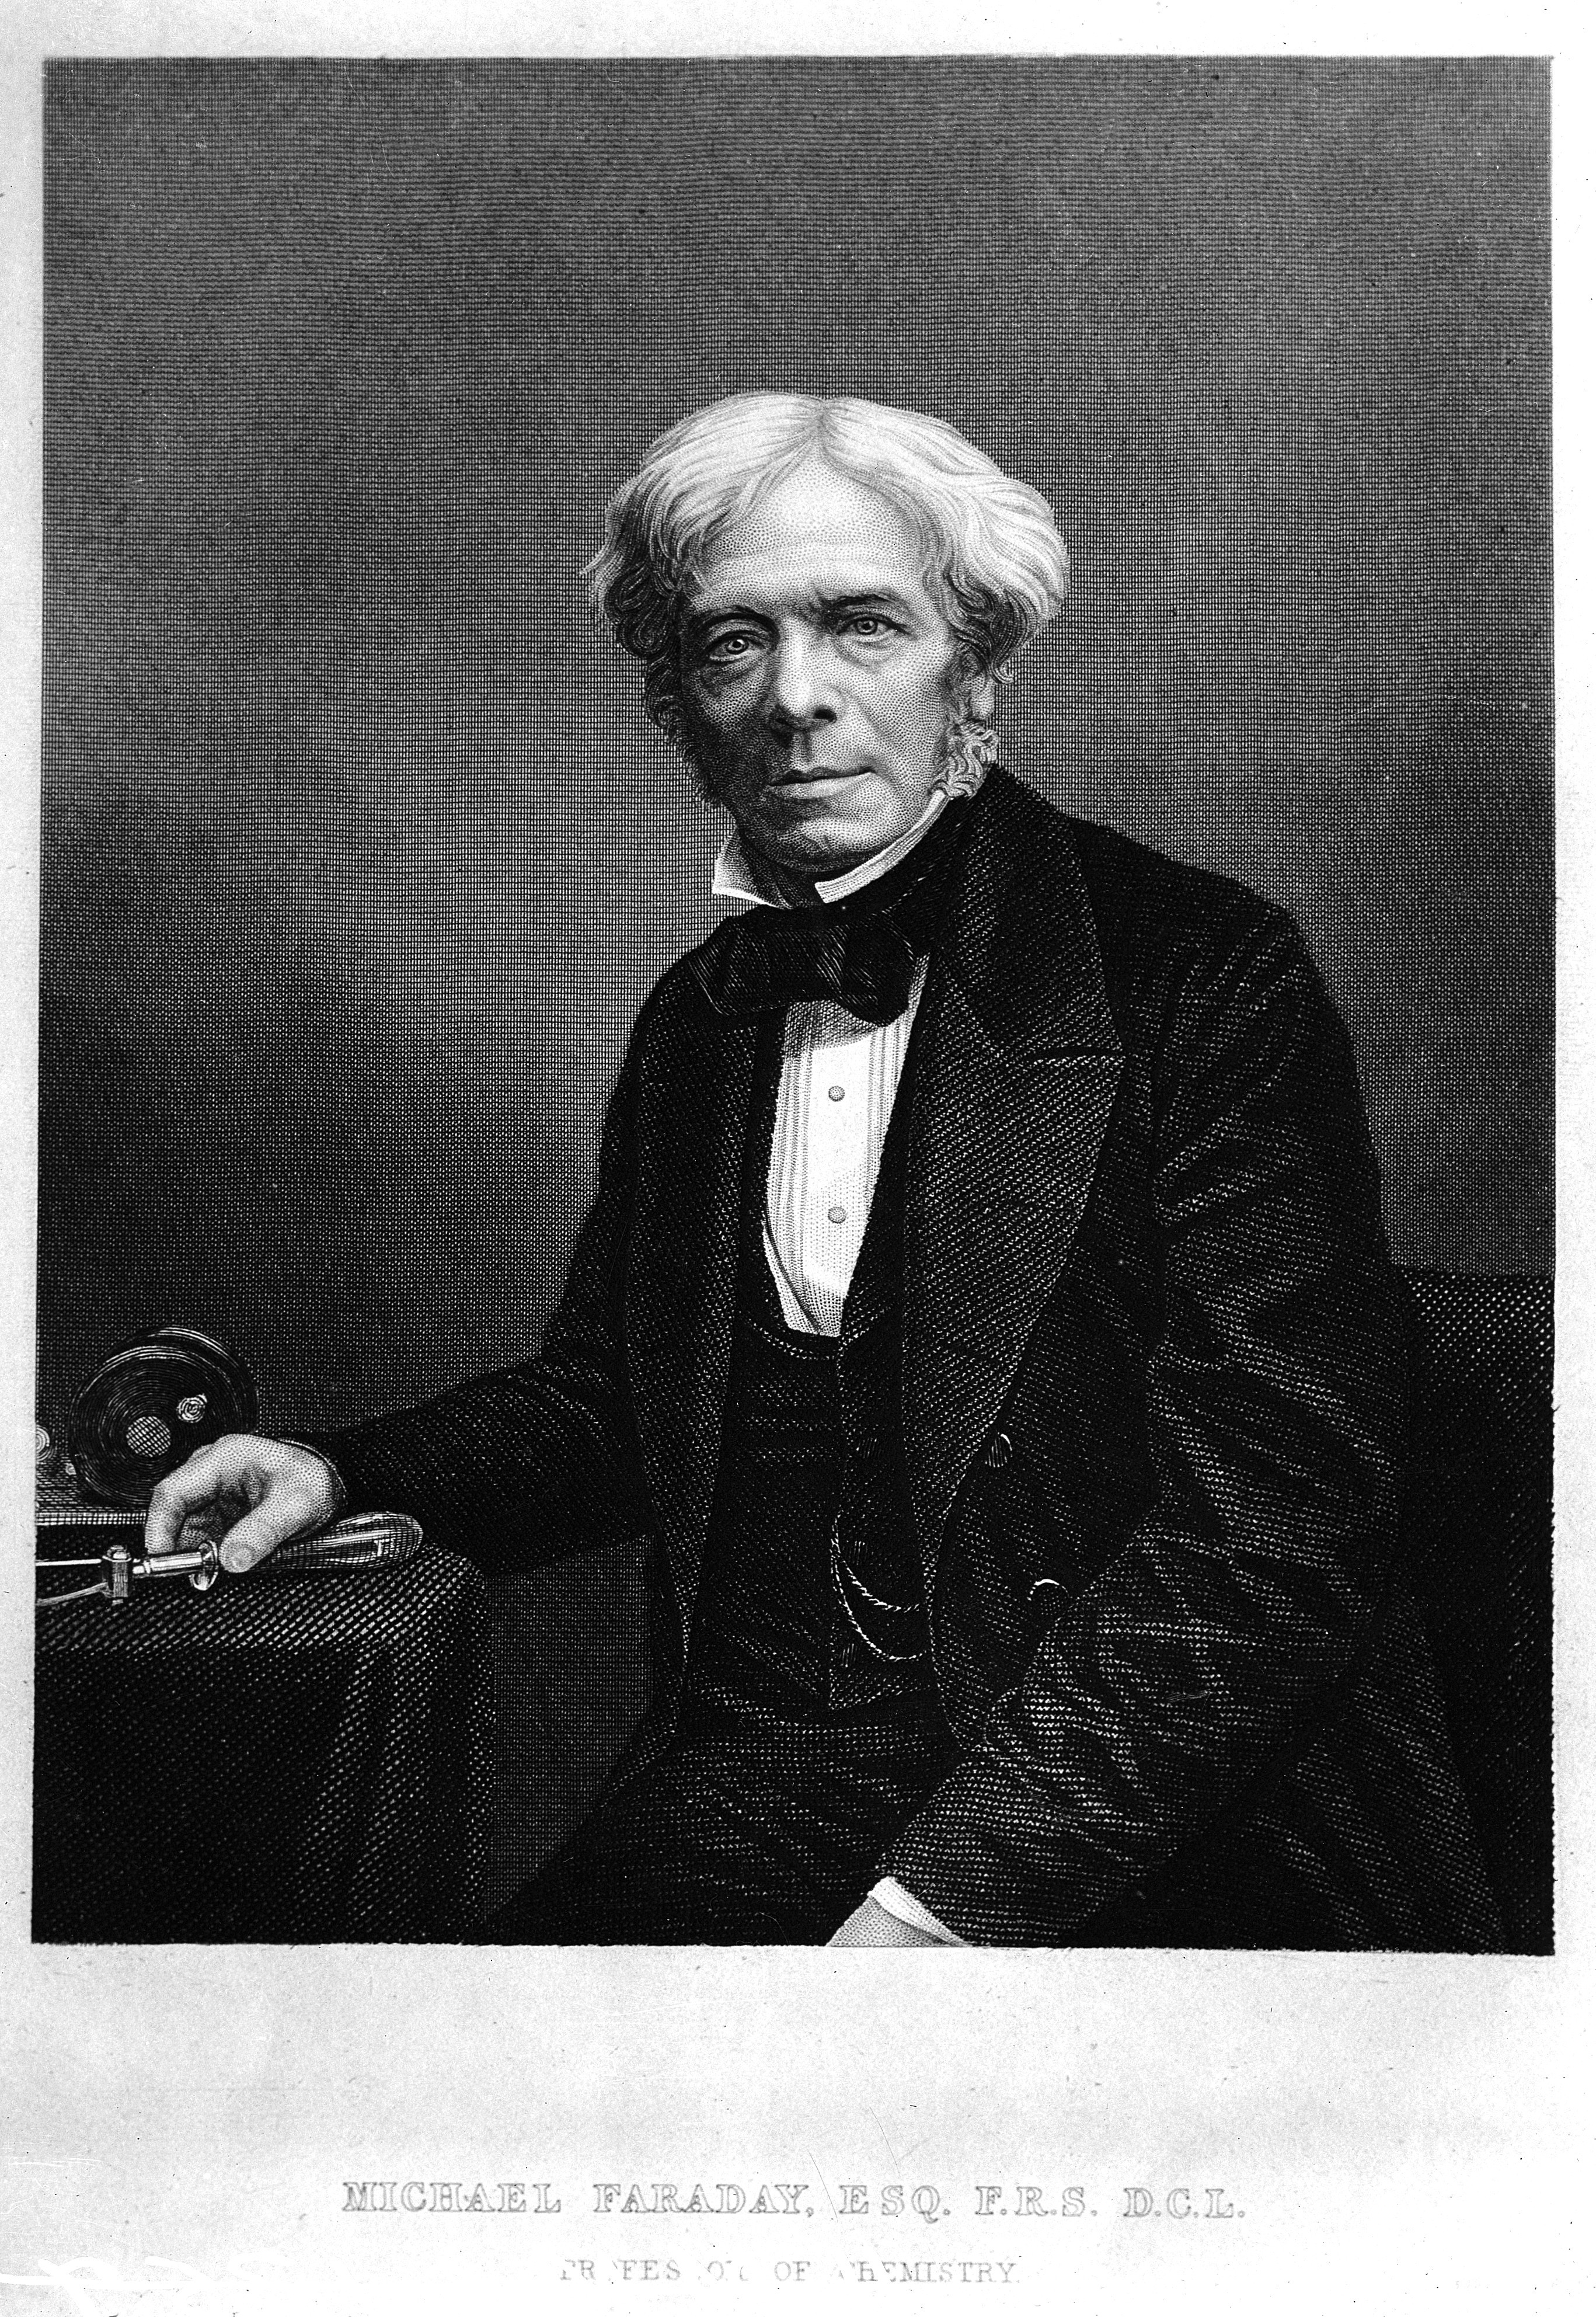 Michael Faraday - Tactile Images Encyclopedia